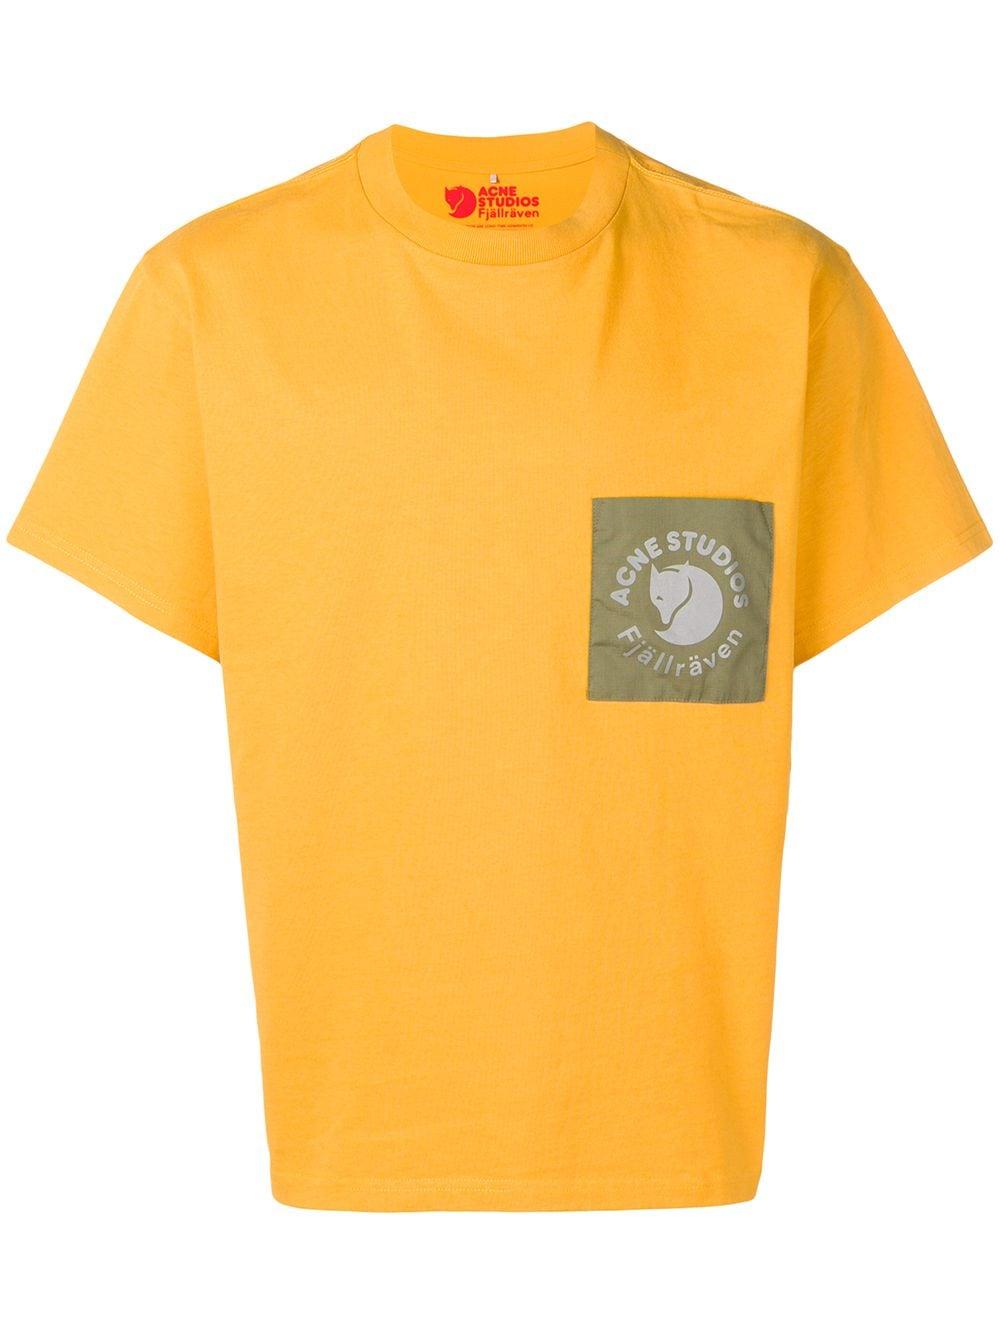 Acne Studios Cotton X Fjällräven Patch T-shirt in Yellow - Lyst